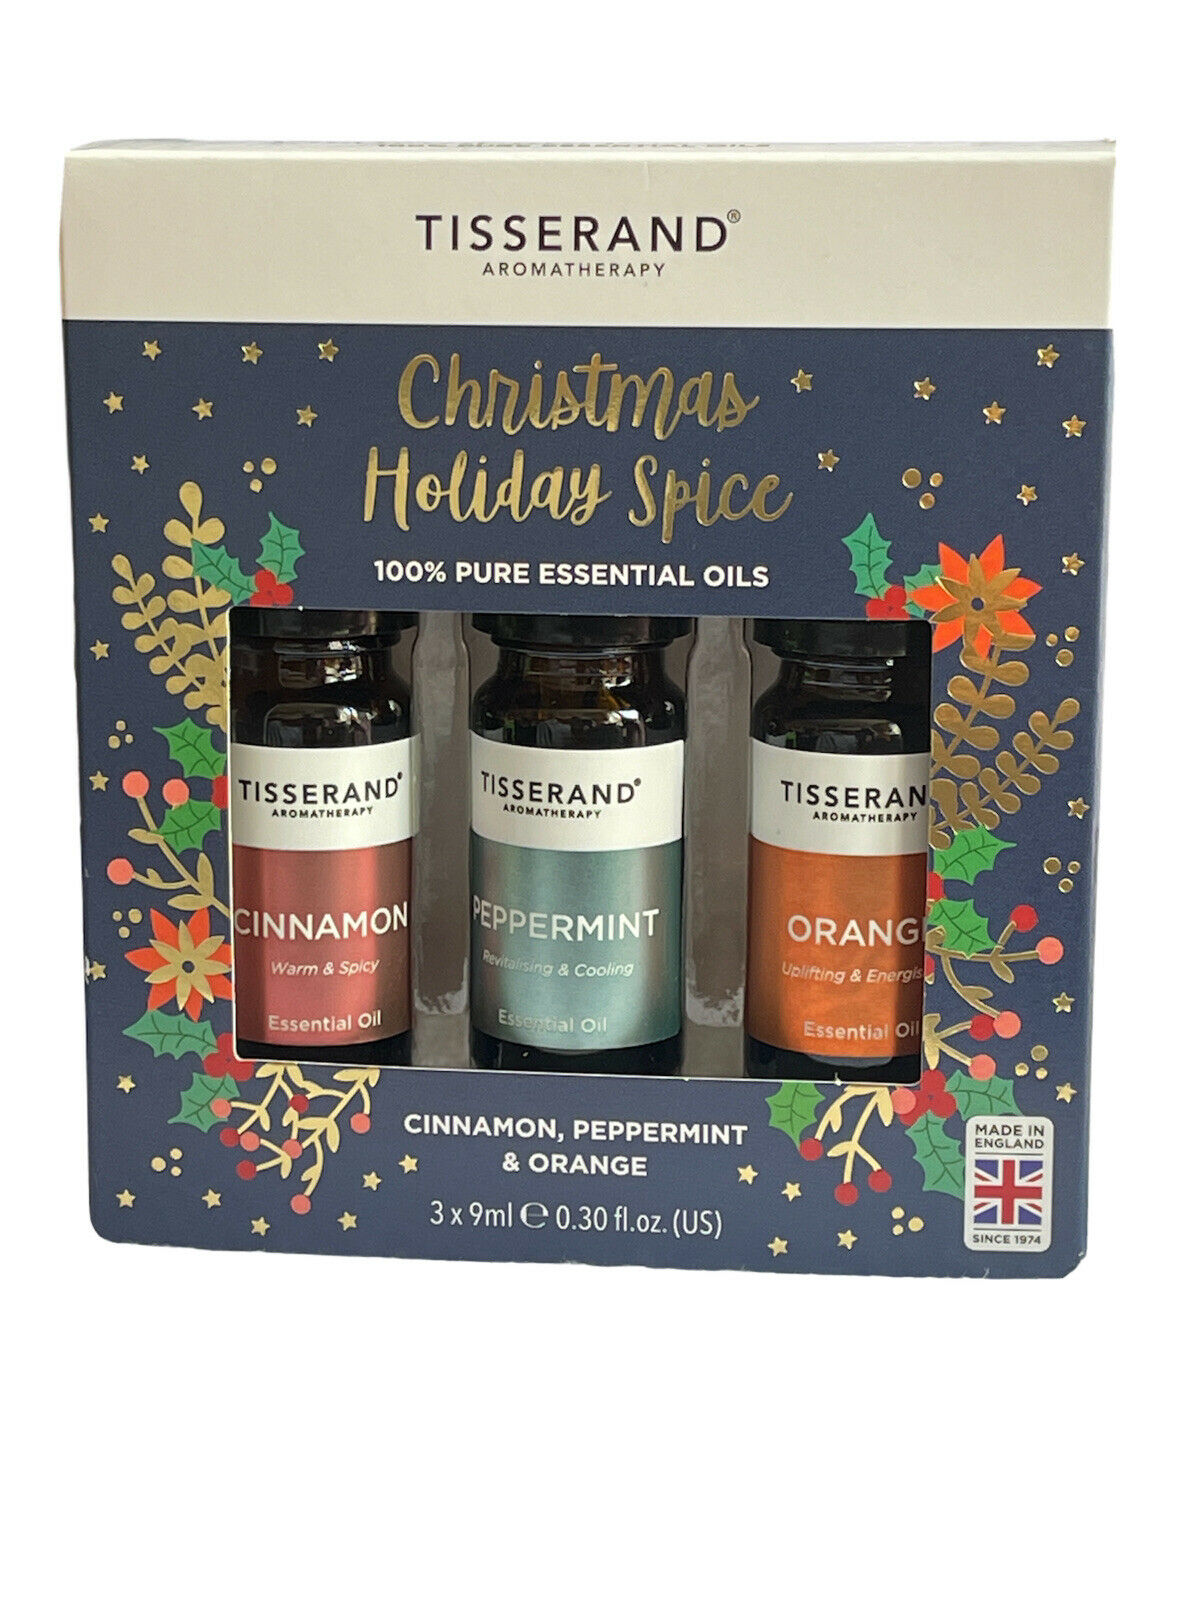 Tisserand Christmas Holiday Spice Aromatherapy Essential Oils (9ml) 3 Pk